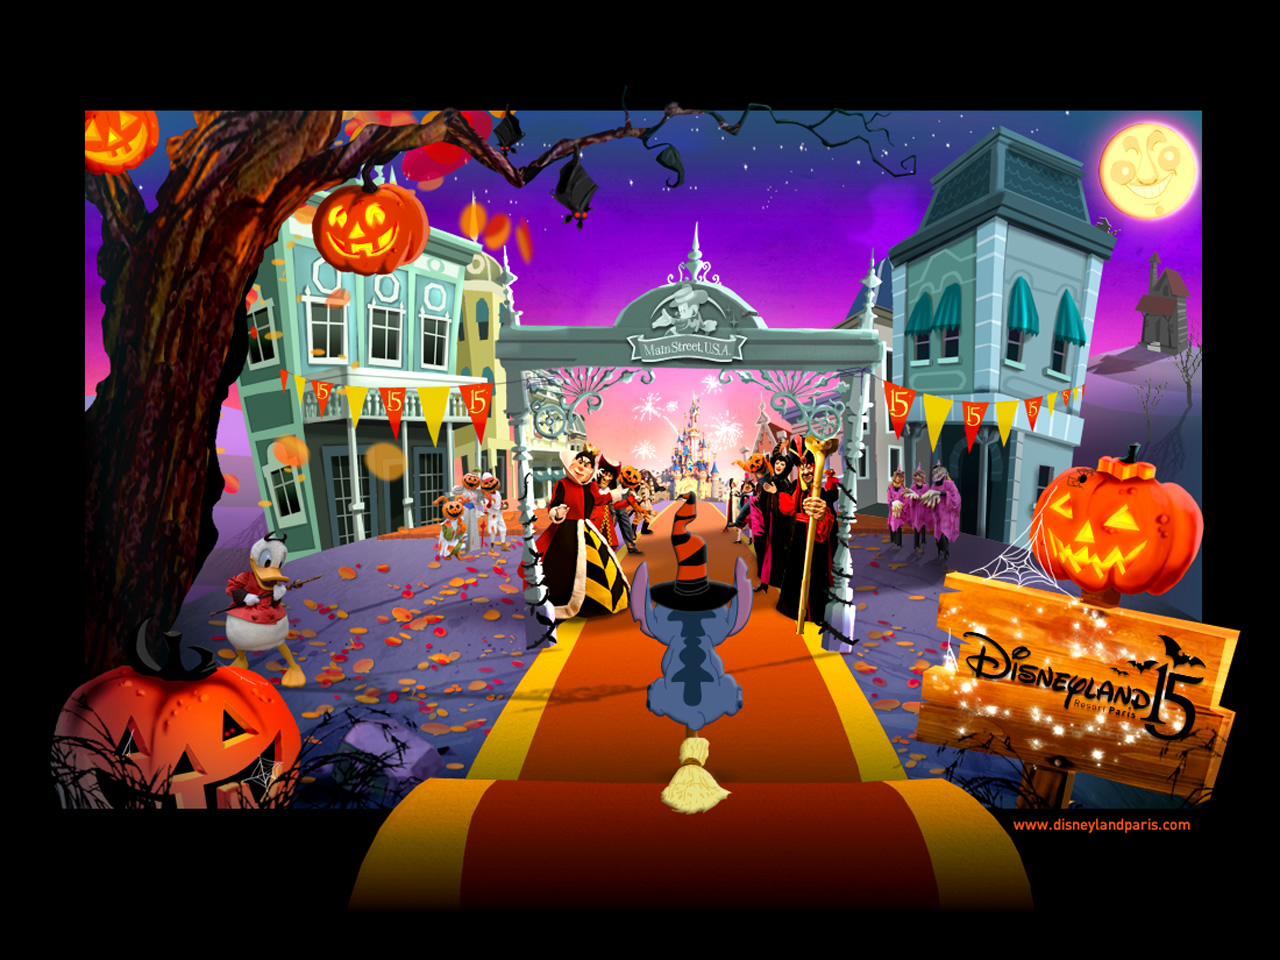  Halloween 2012 wallpaper for Disneys fan Wallpaper for holiday 1280x960